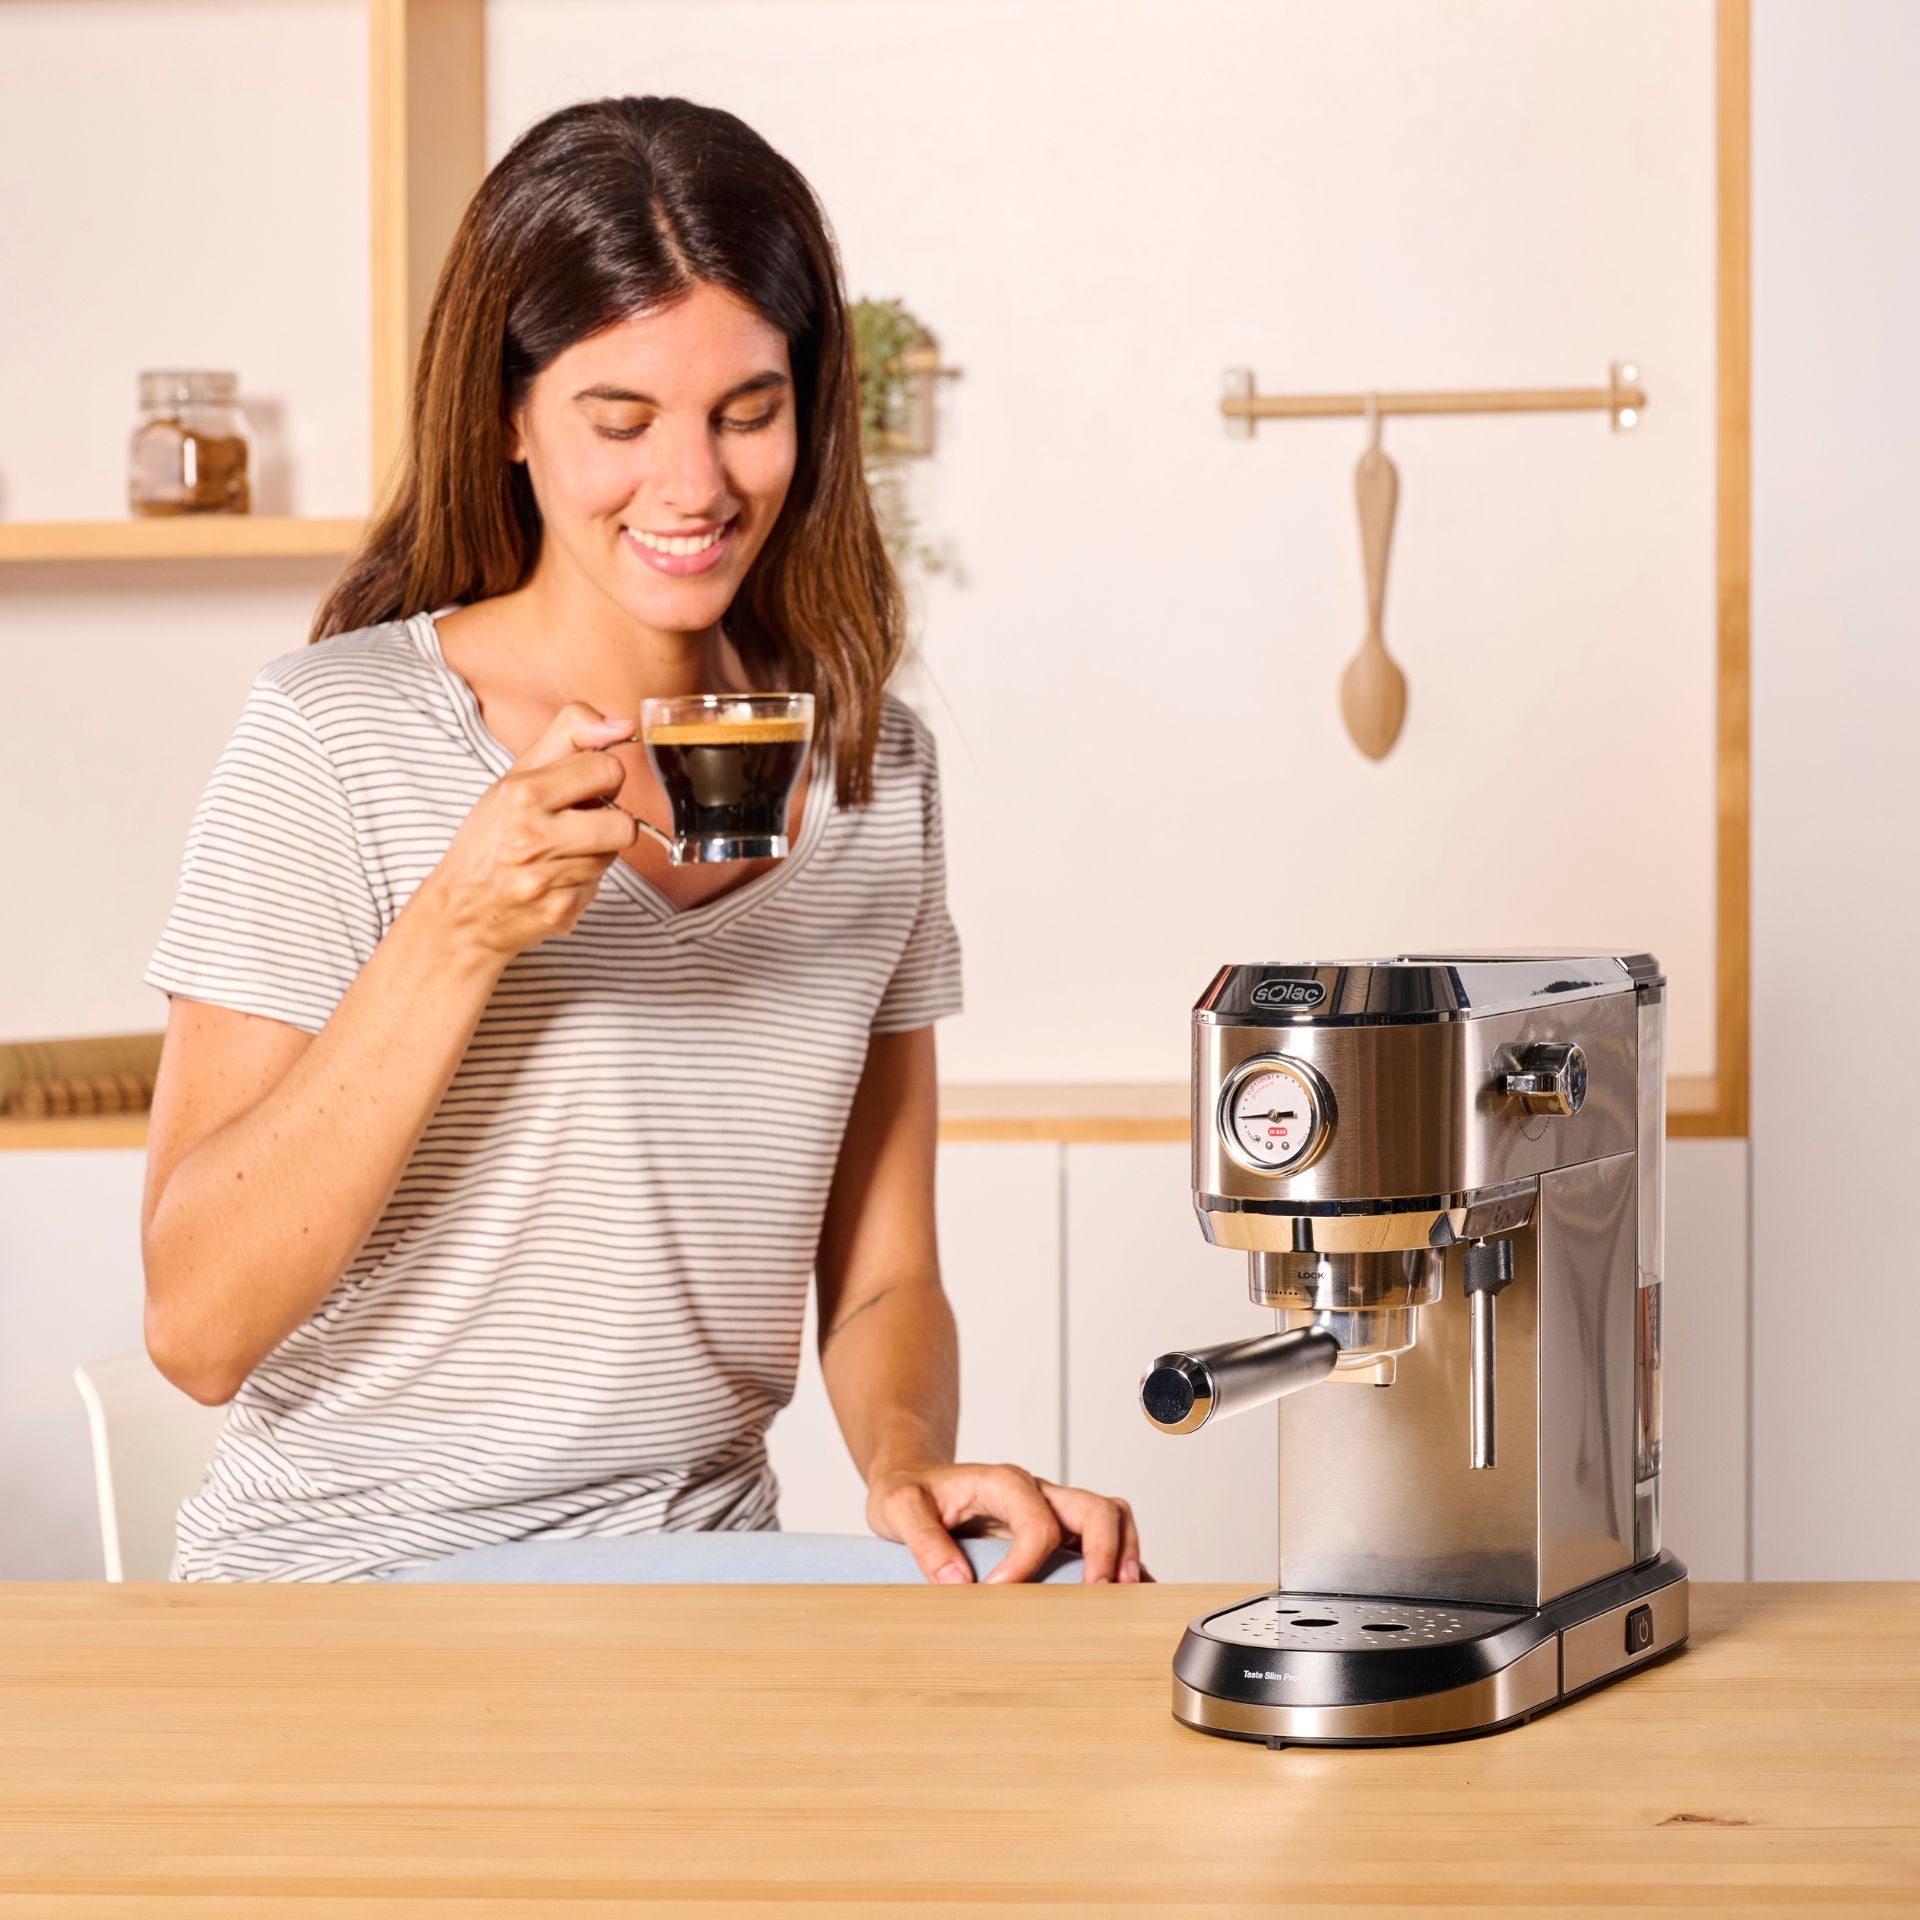 Prepara un café como un barista con una cafetera express para tu hogar